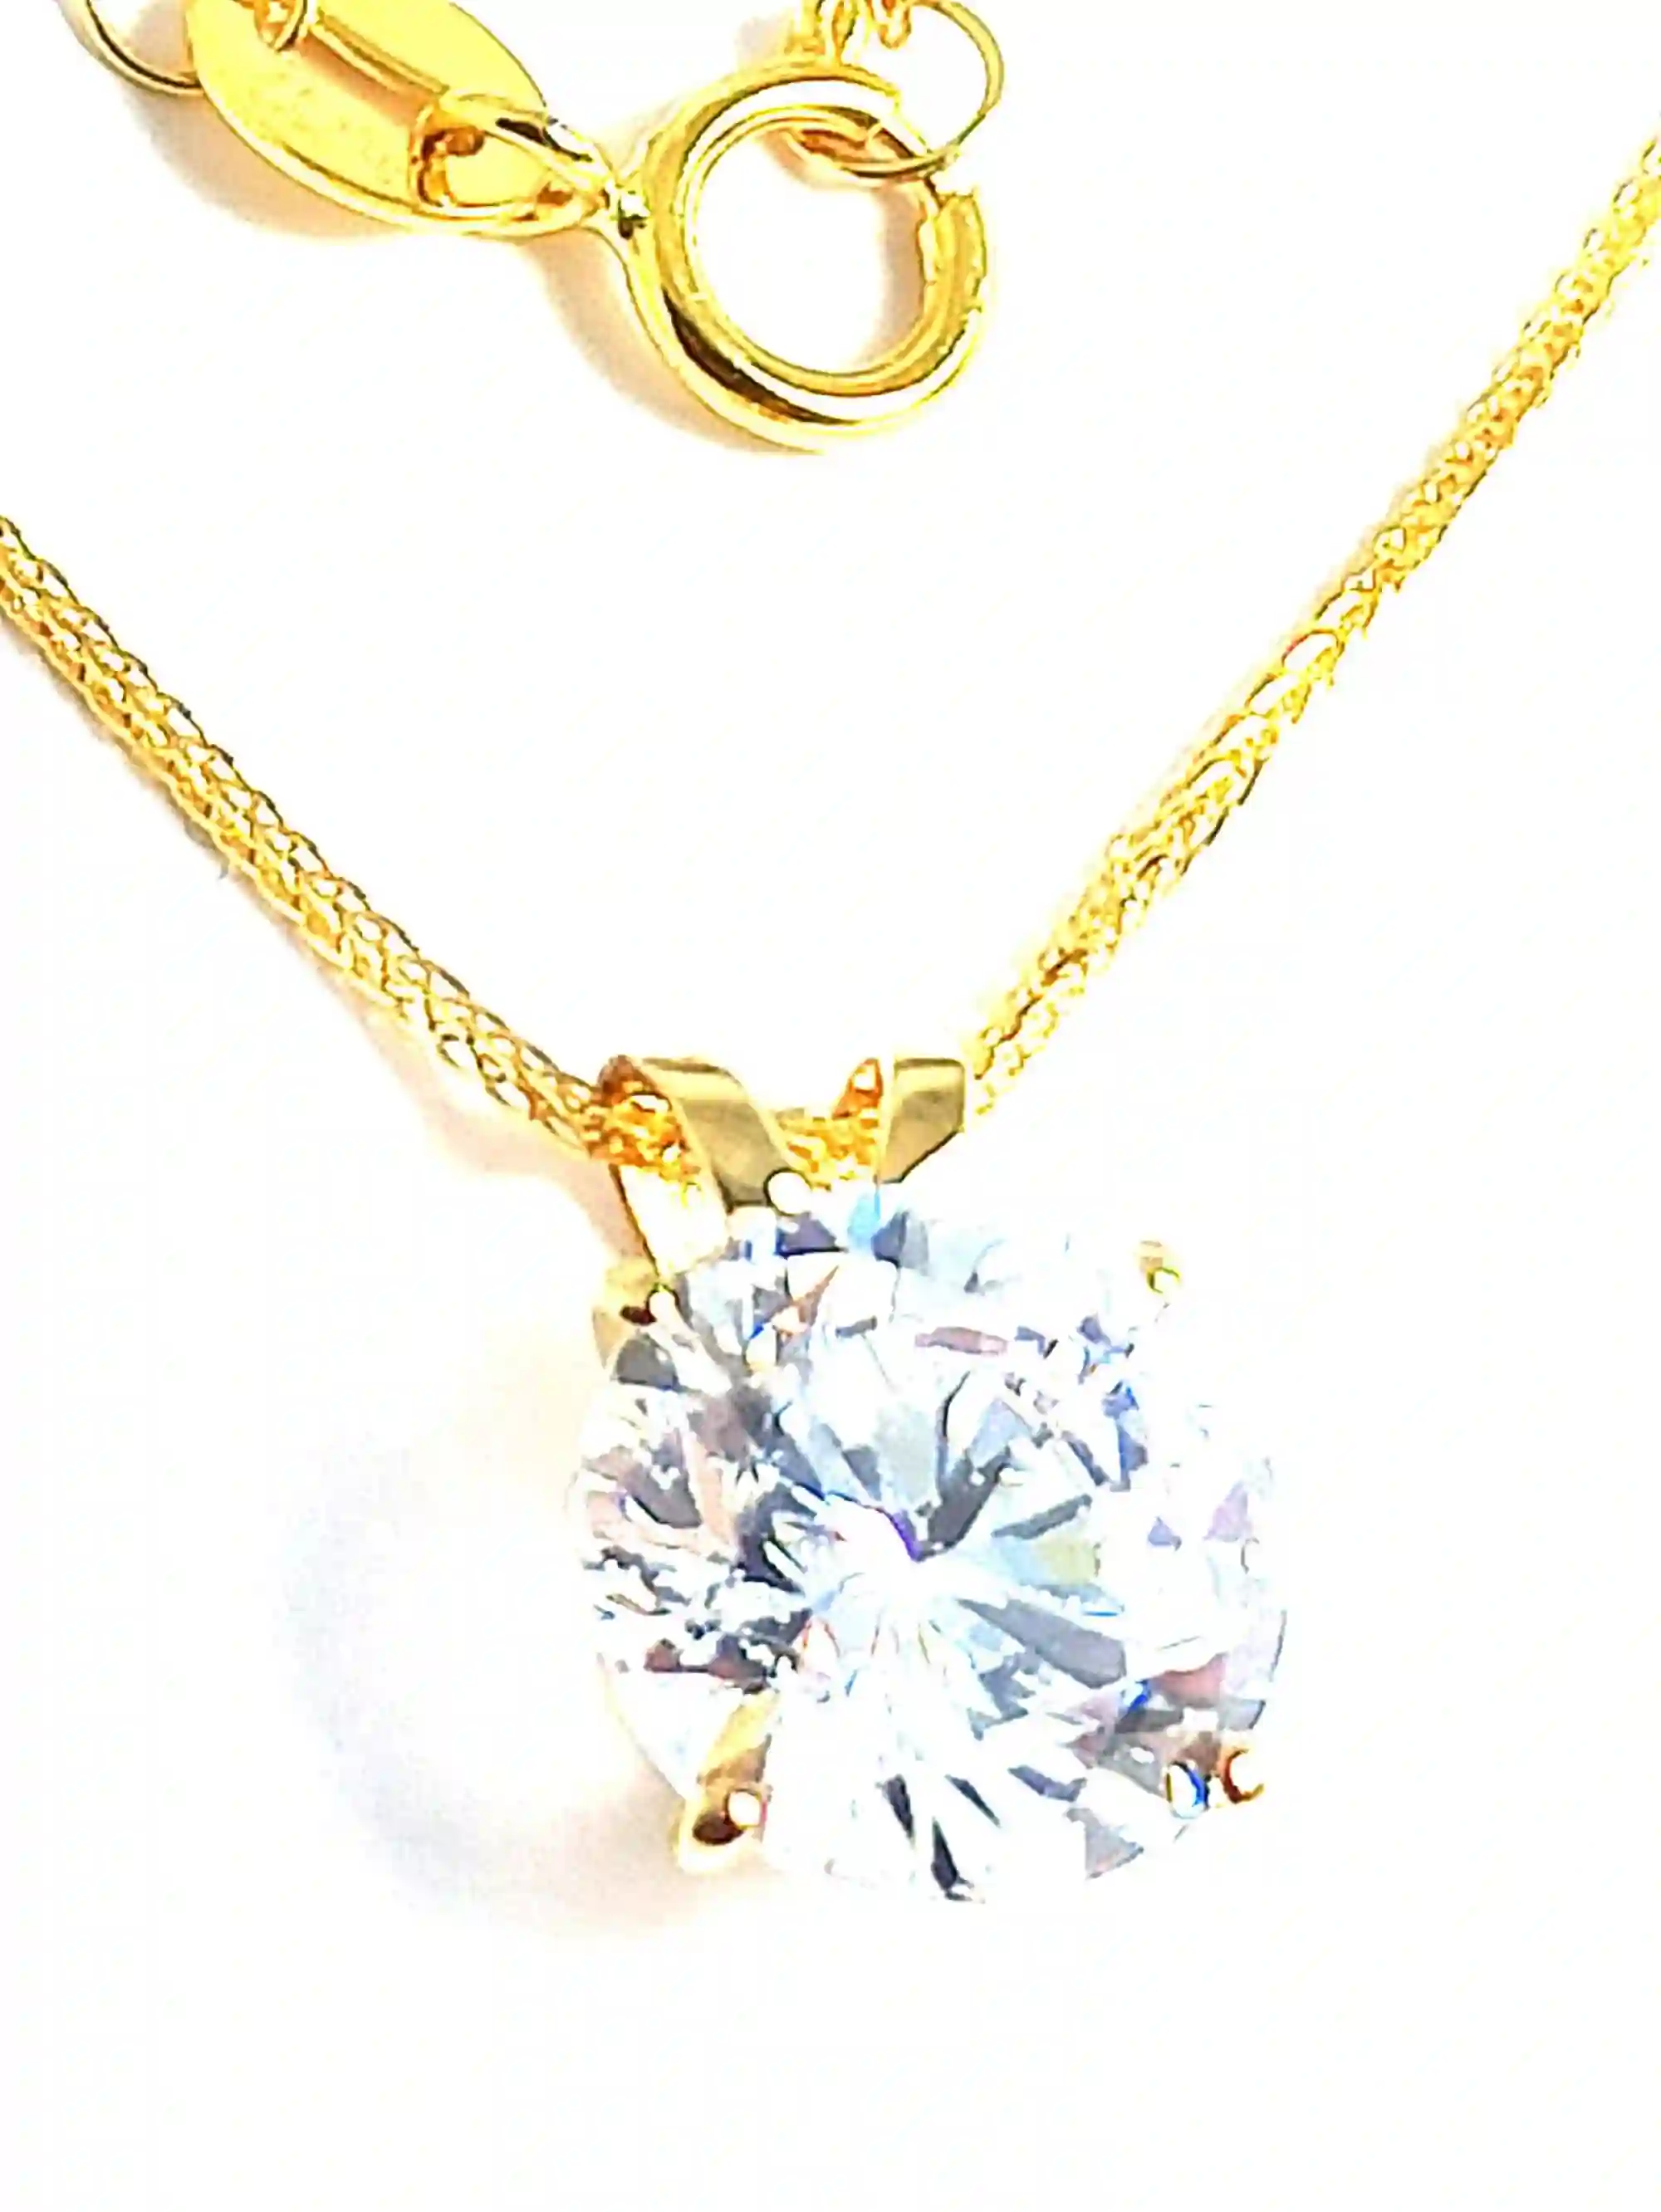 1.5ct Diamond Solitaire Necklace SOLID 18k GOLD BRILLIANT Cut Diamond Necklace 18